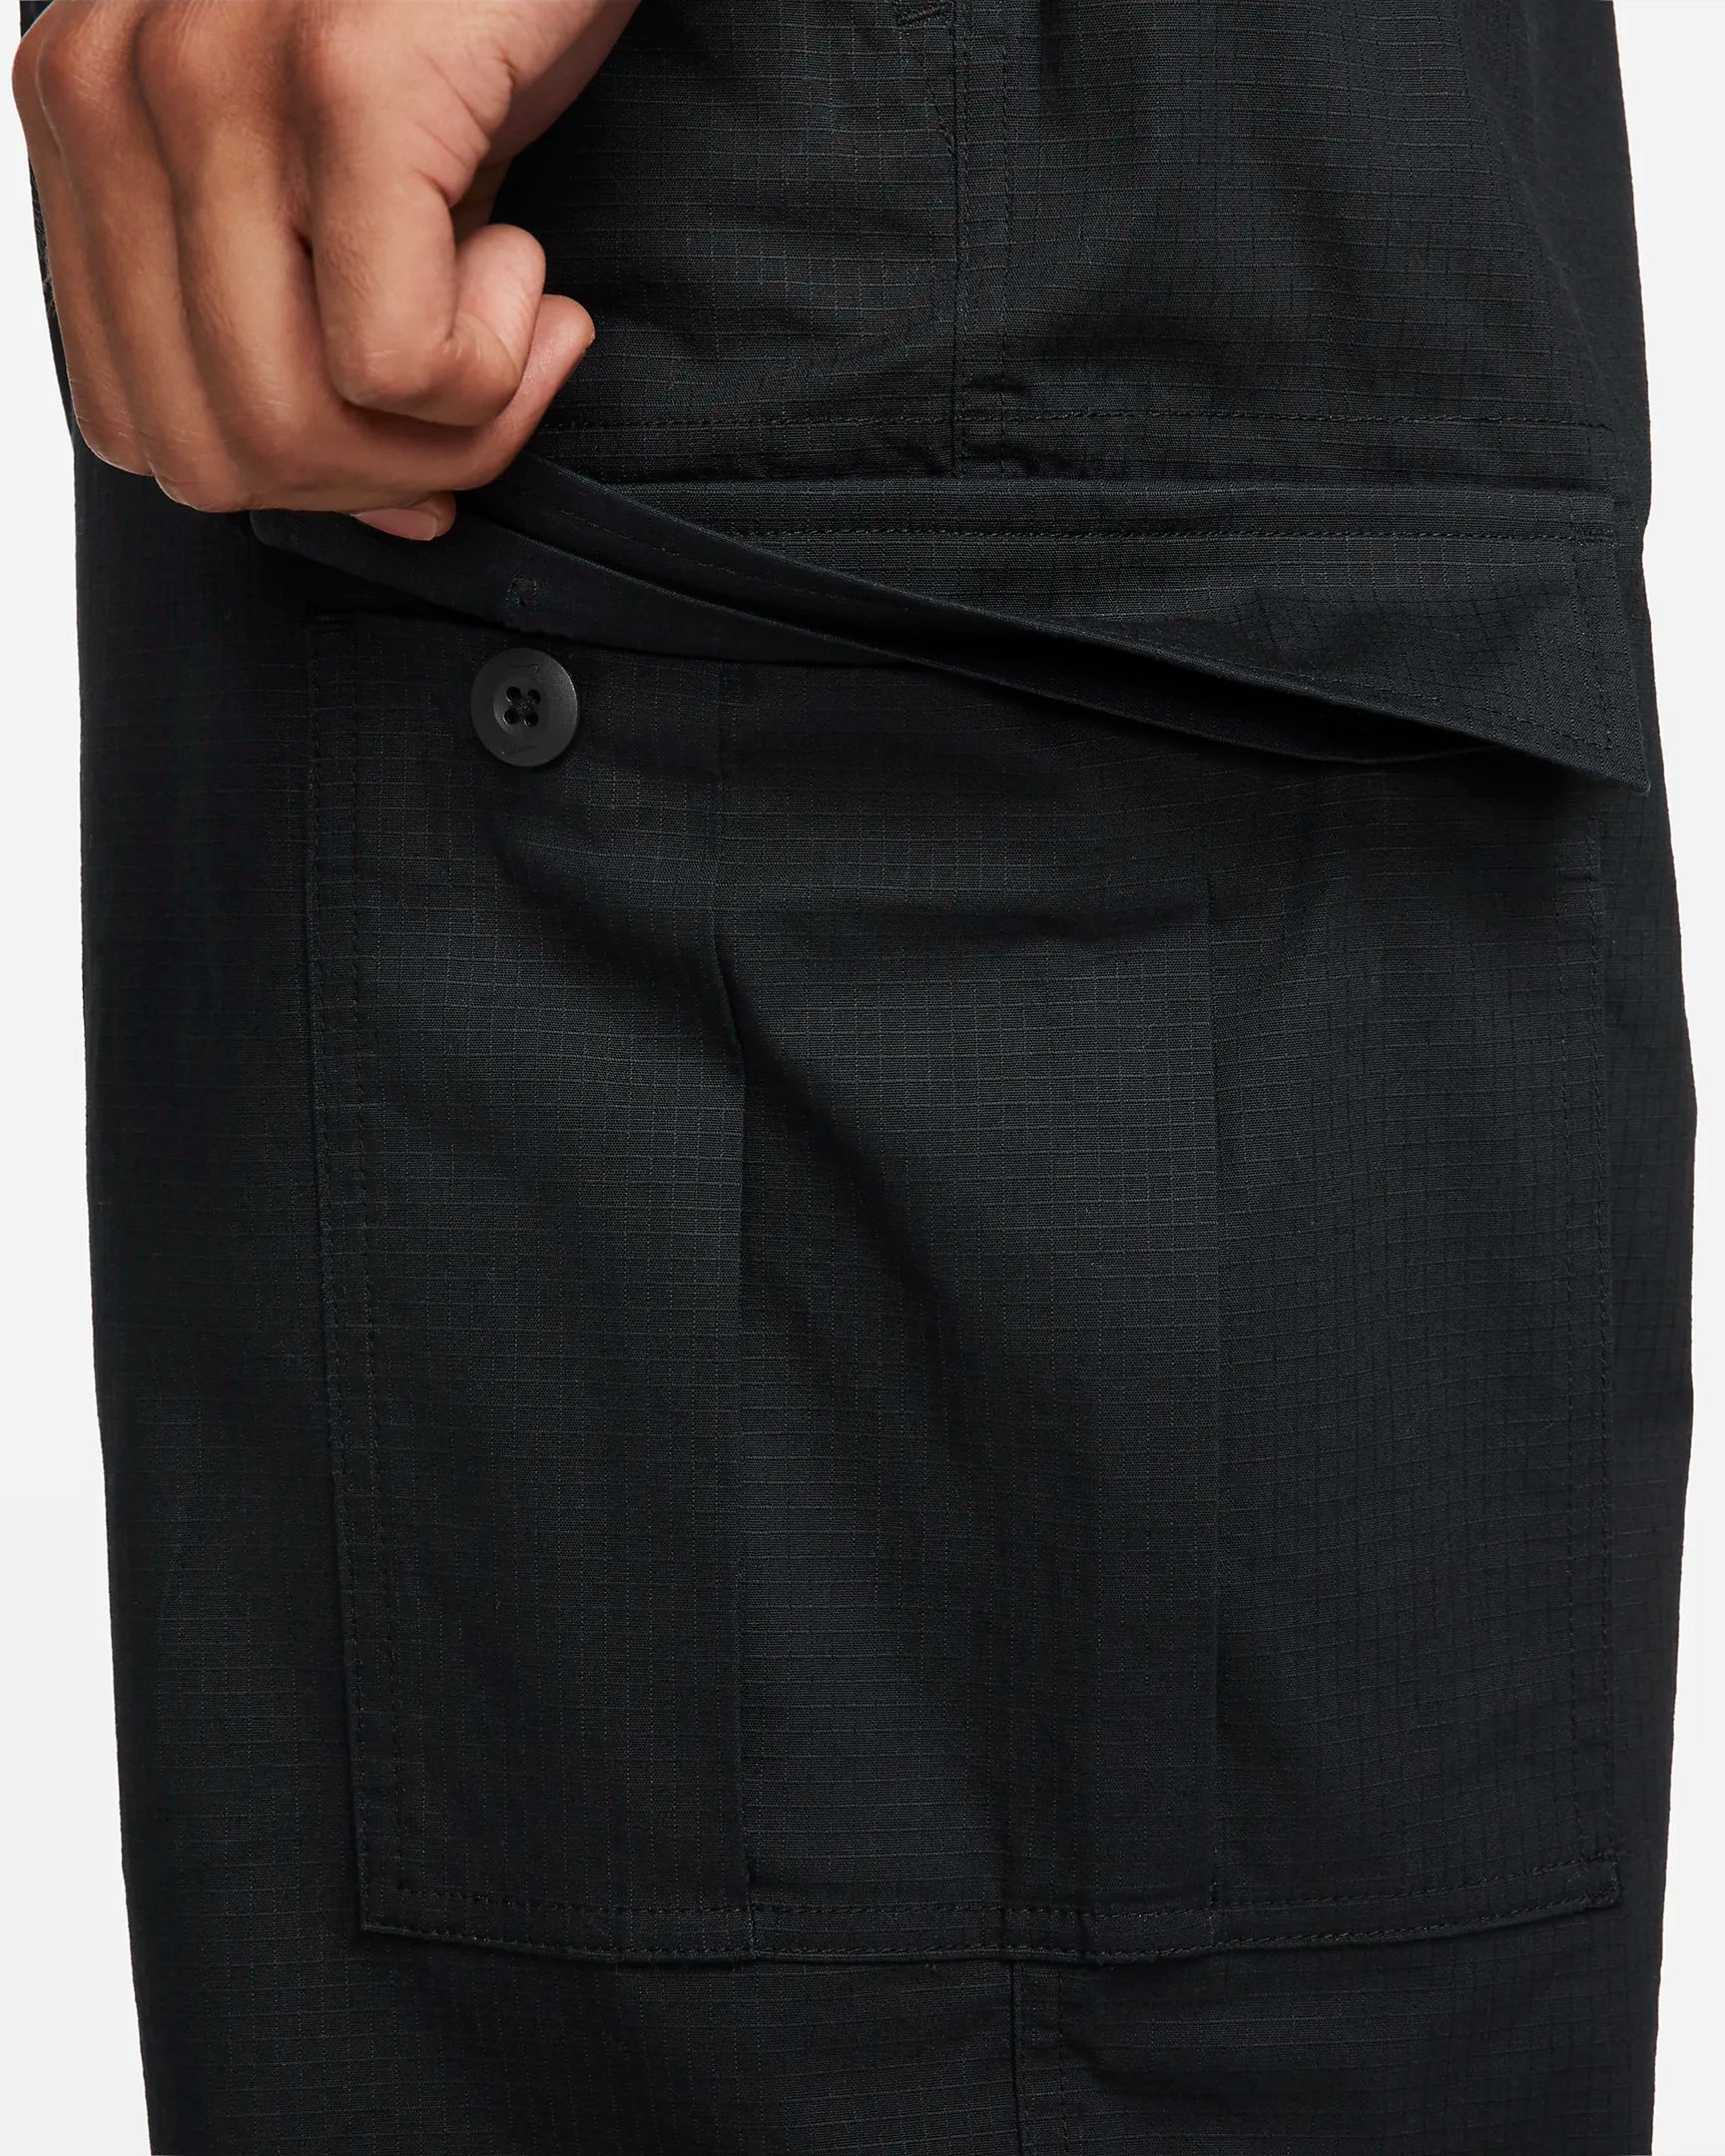 Nike SB Kearny Cargo Pants - Black/White